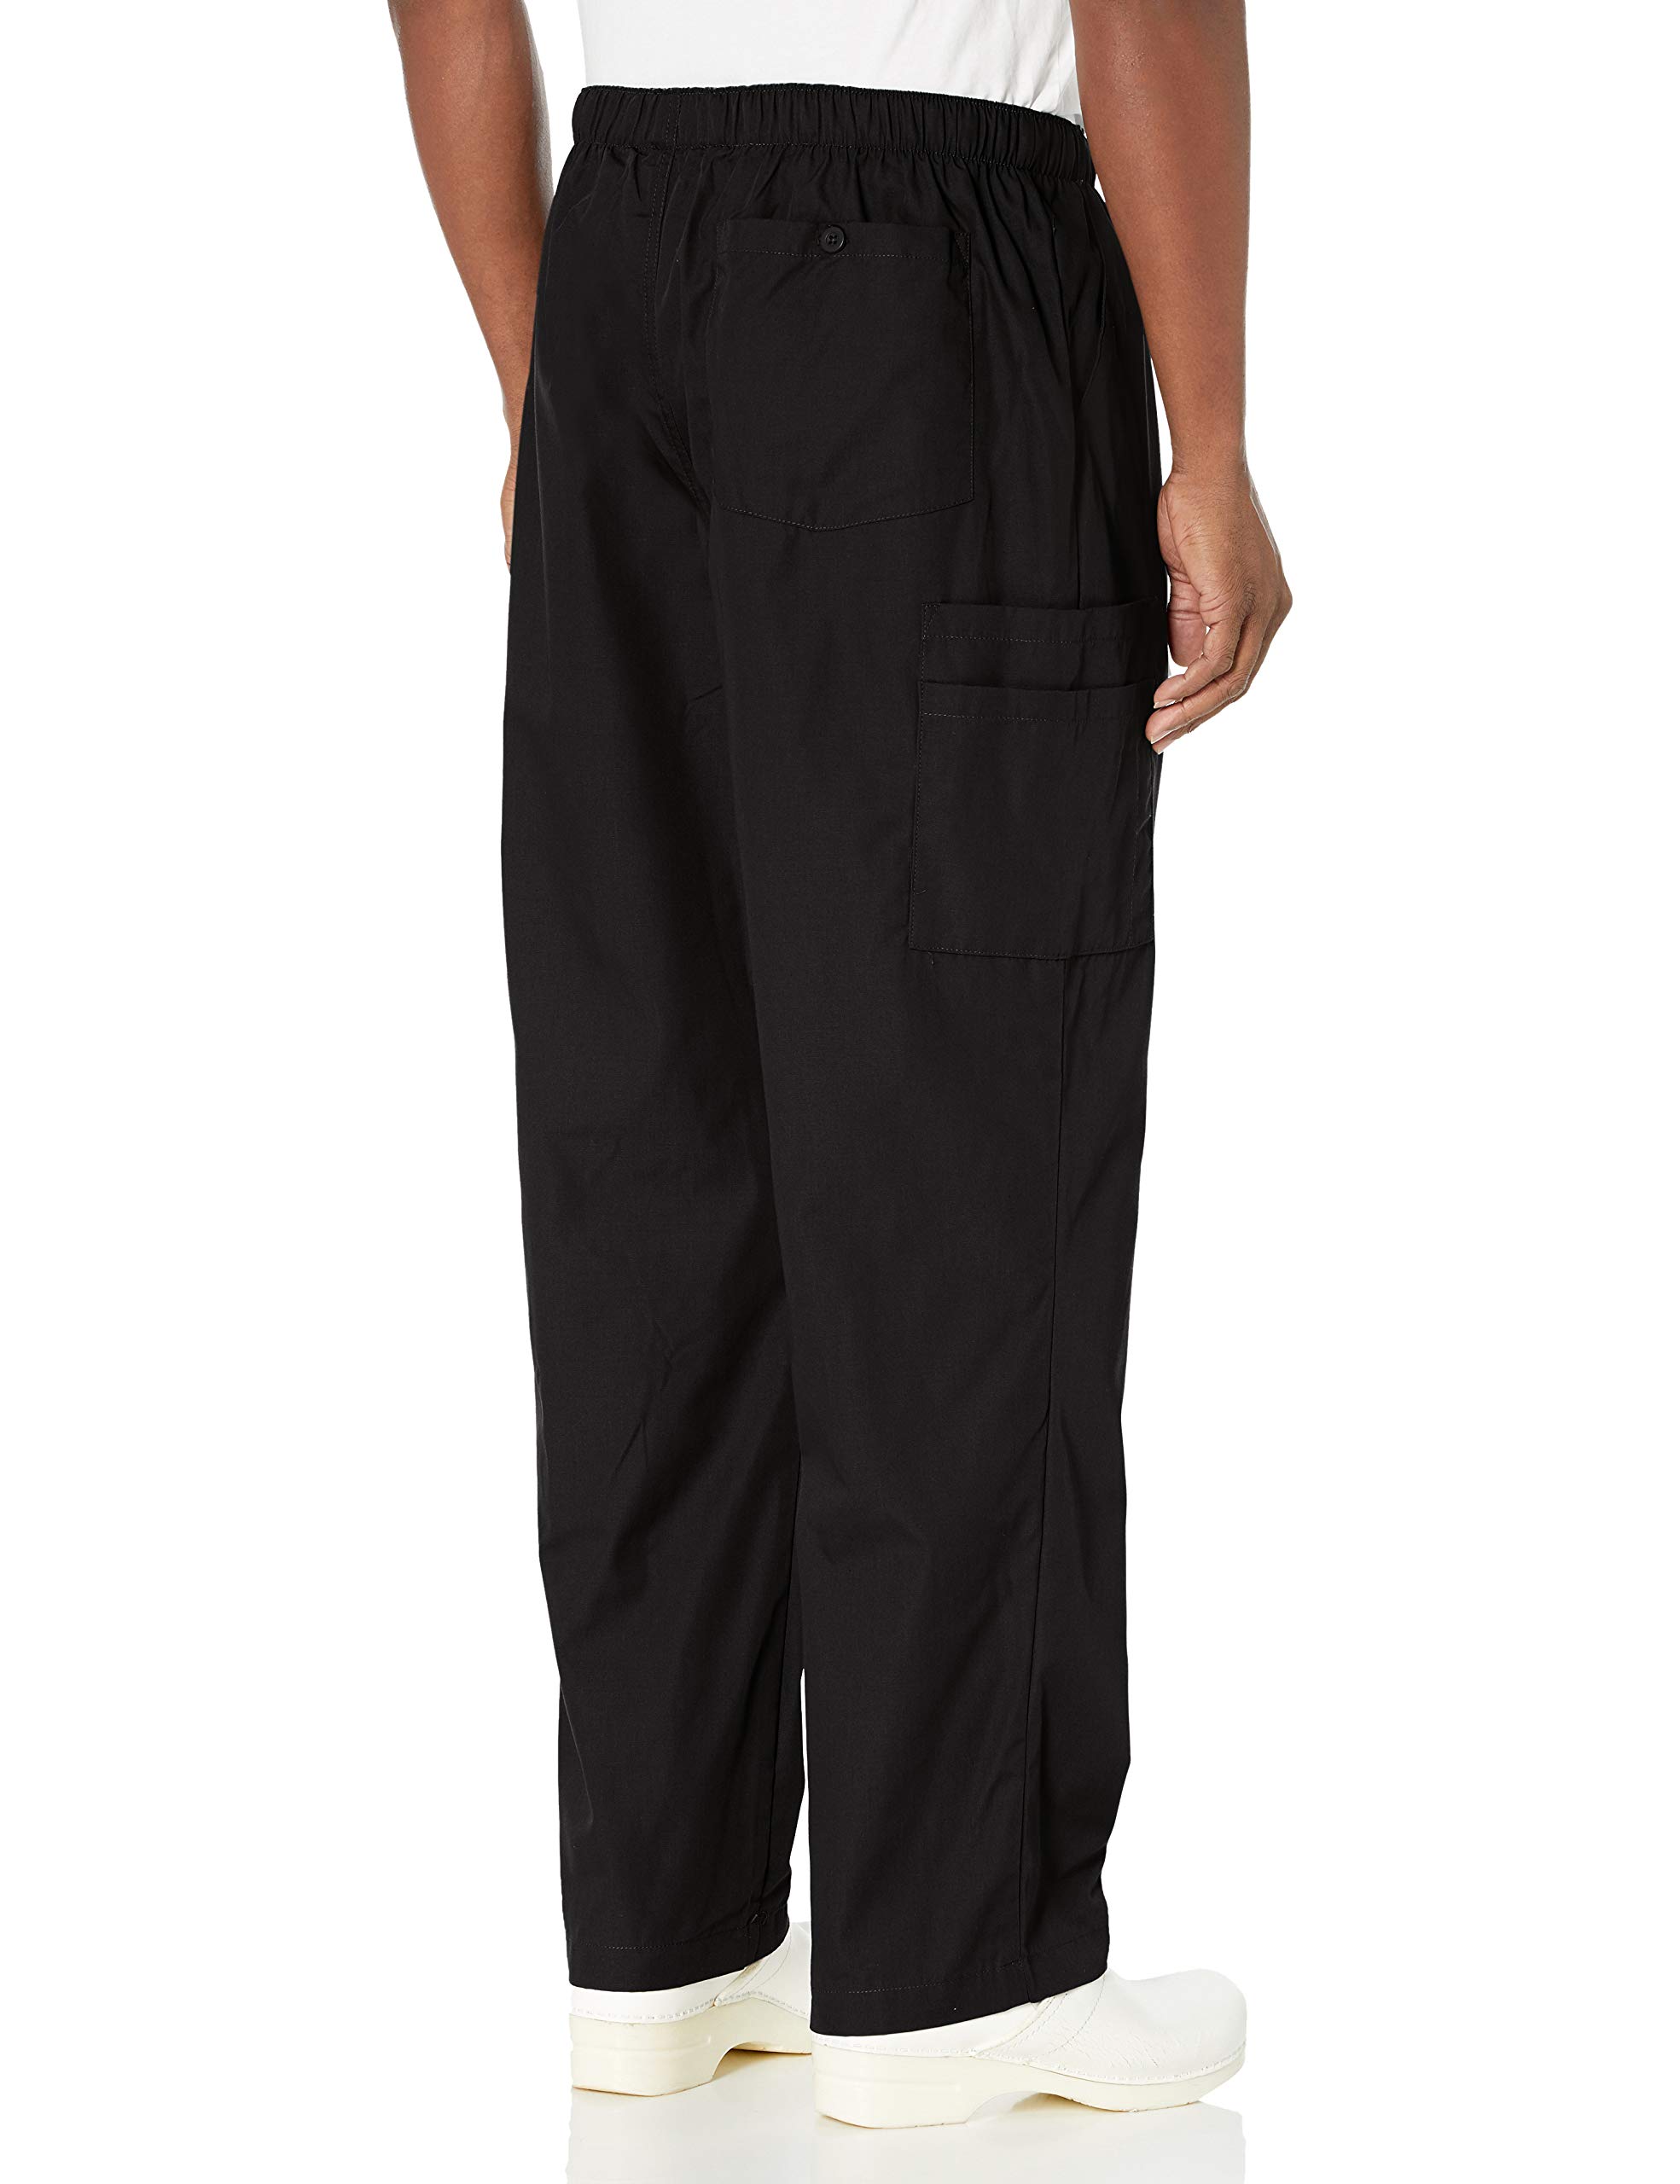 CHEROKEE Scrubs Authentic Workwear Unisex 7 Pocket Cargo Pant (Black, S)